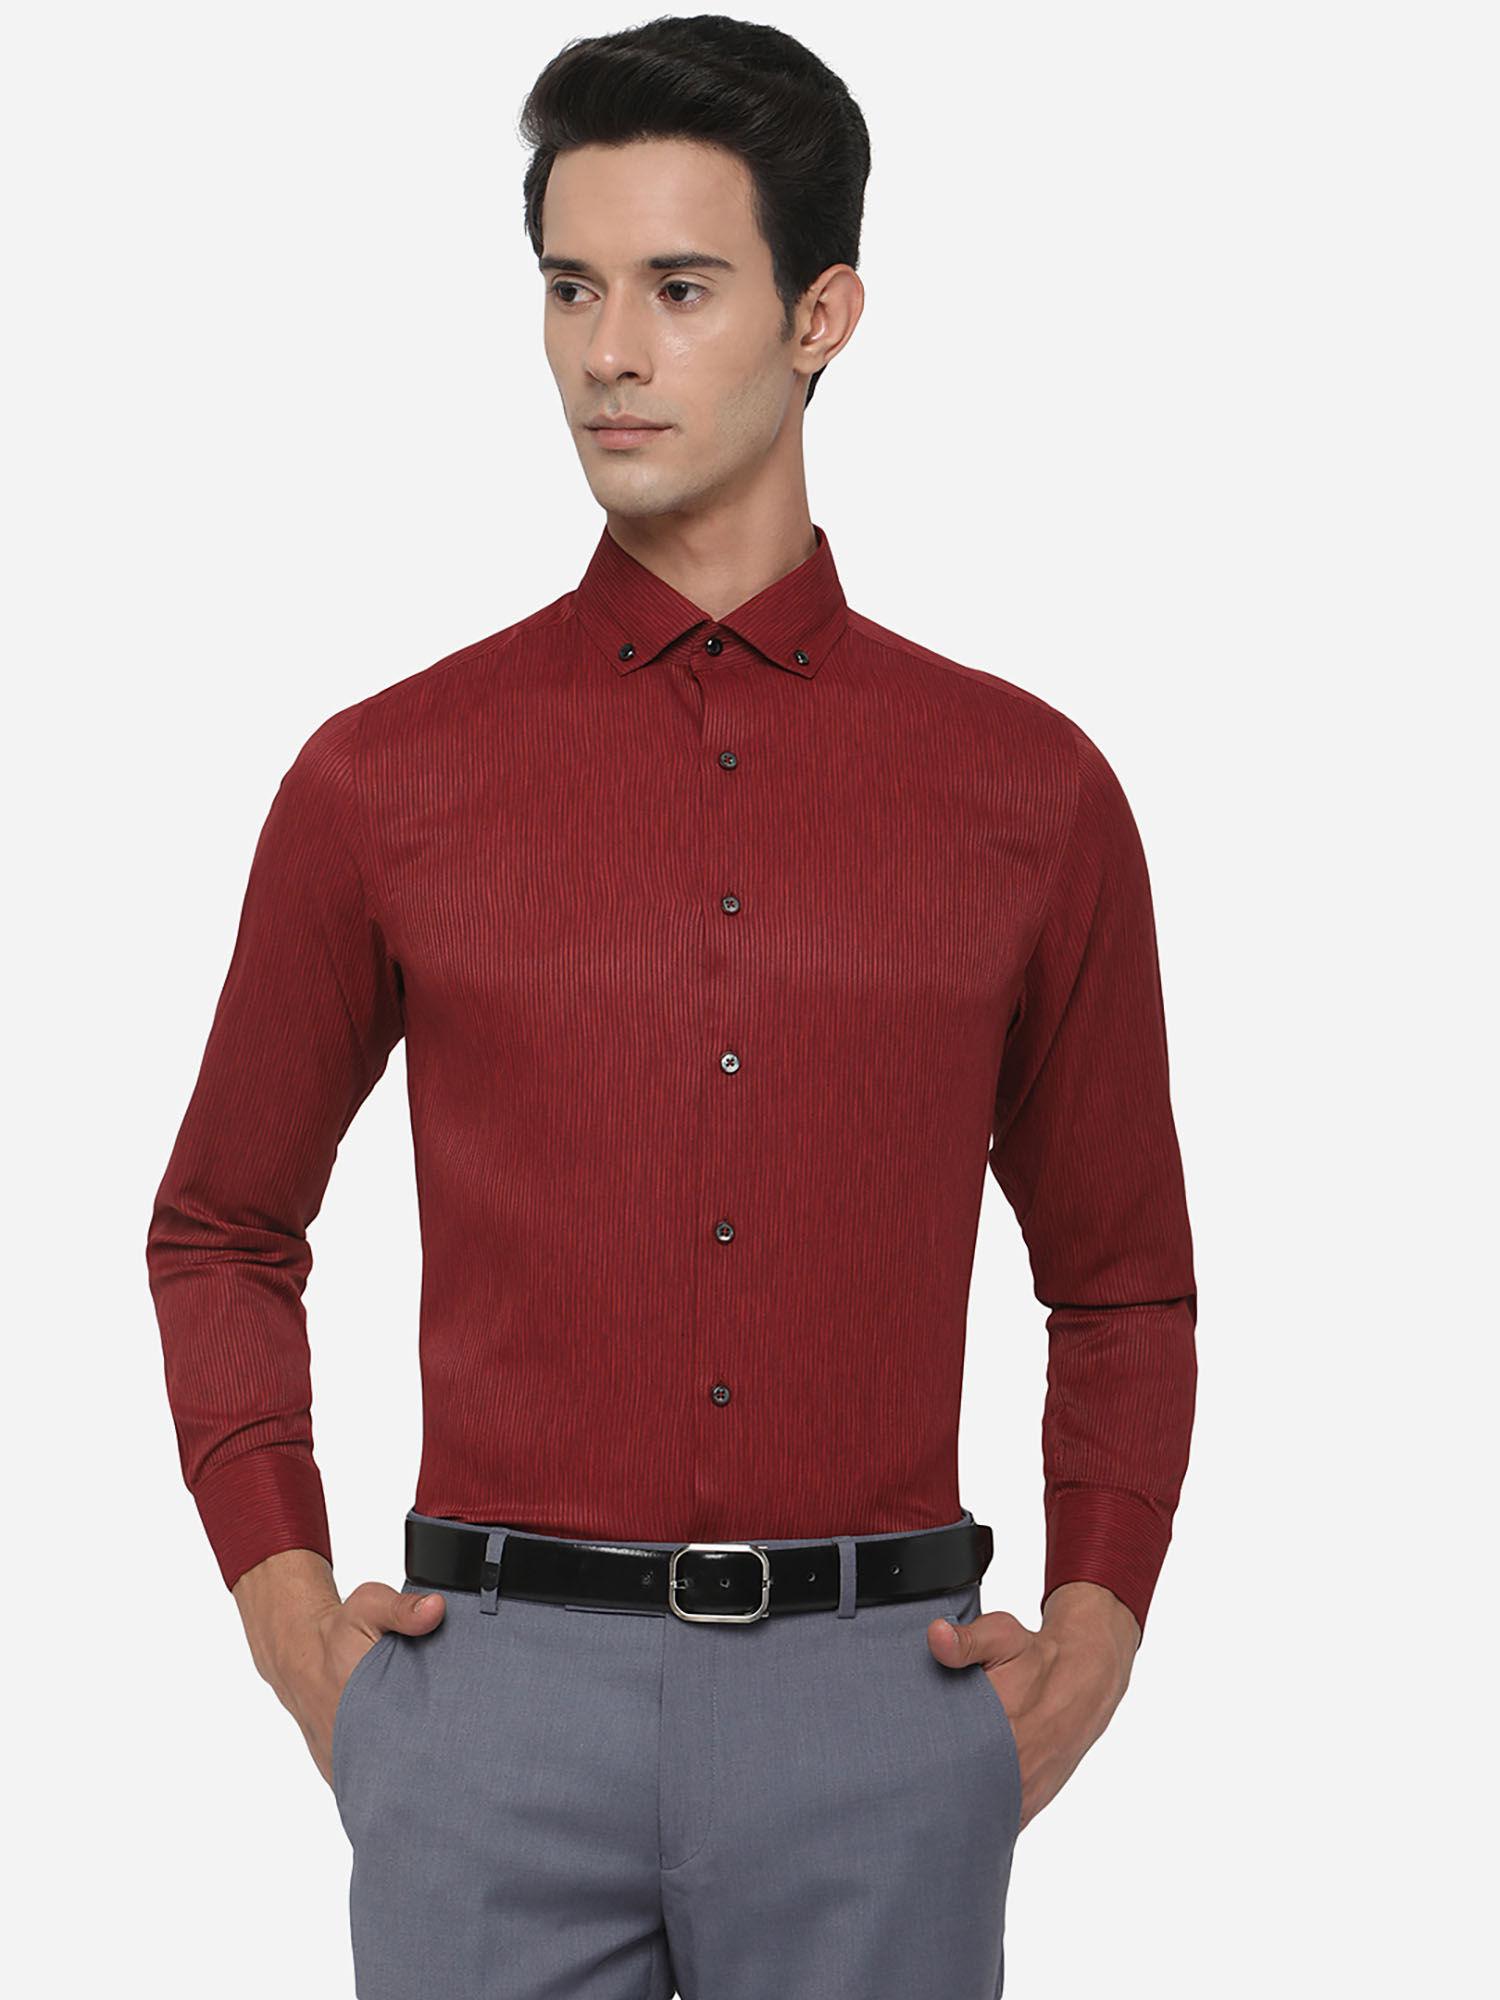 mens stripes maroon cotton slim fit semi formal party wear shirt